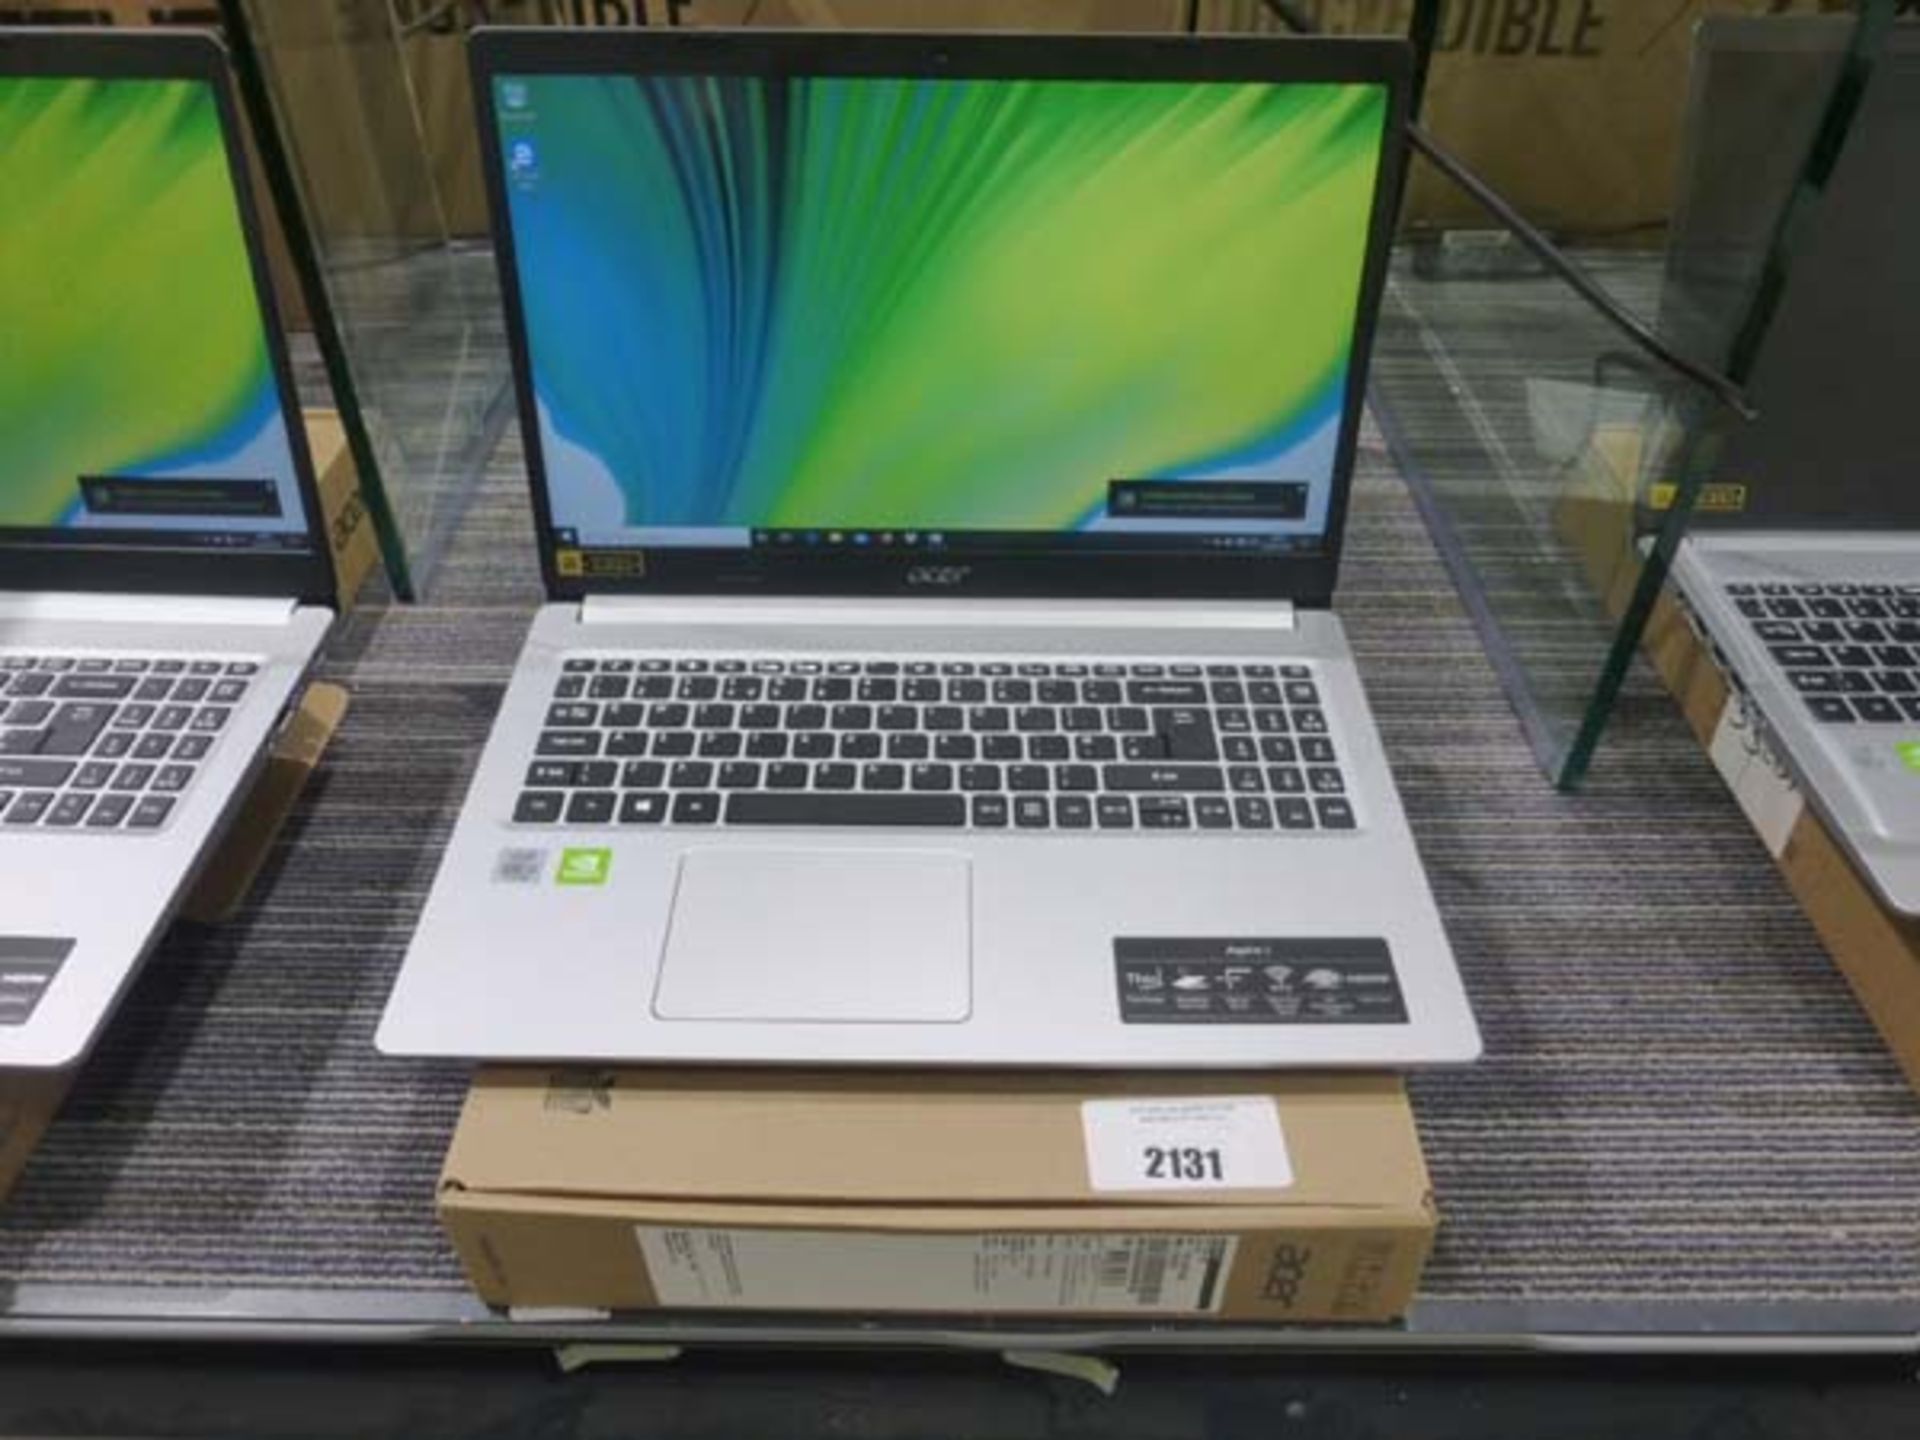 2108 - Acer Aspire 5 laptop core i3 10th gen processor, 4gb ram, 256gb storage, Windows 10